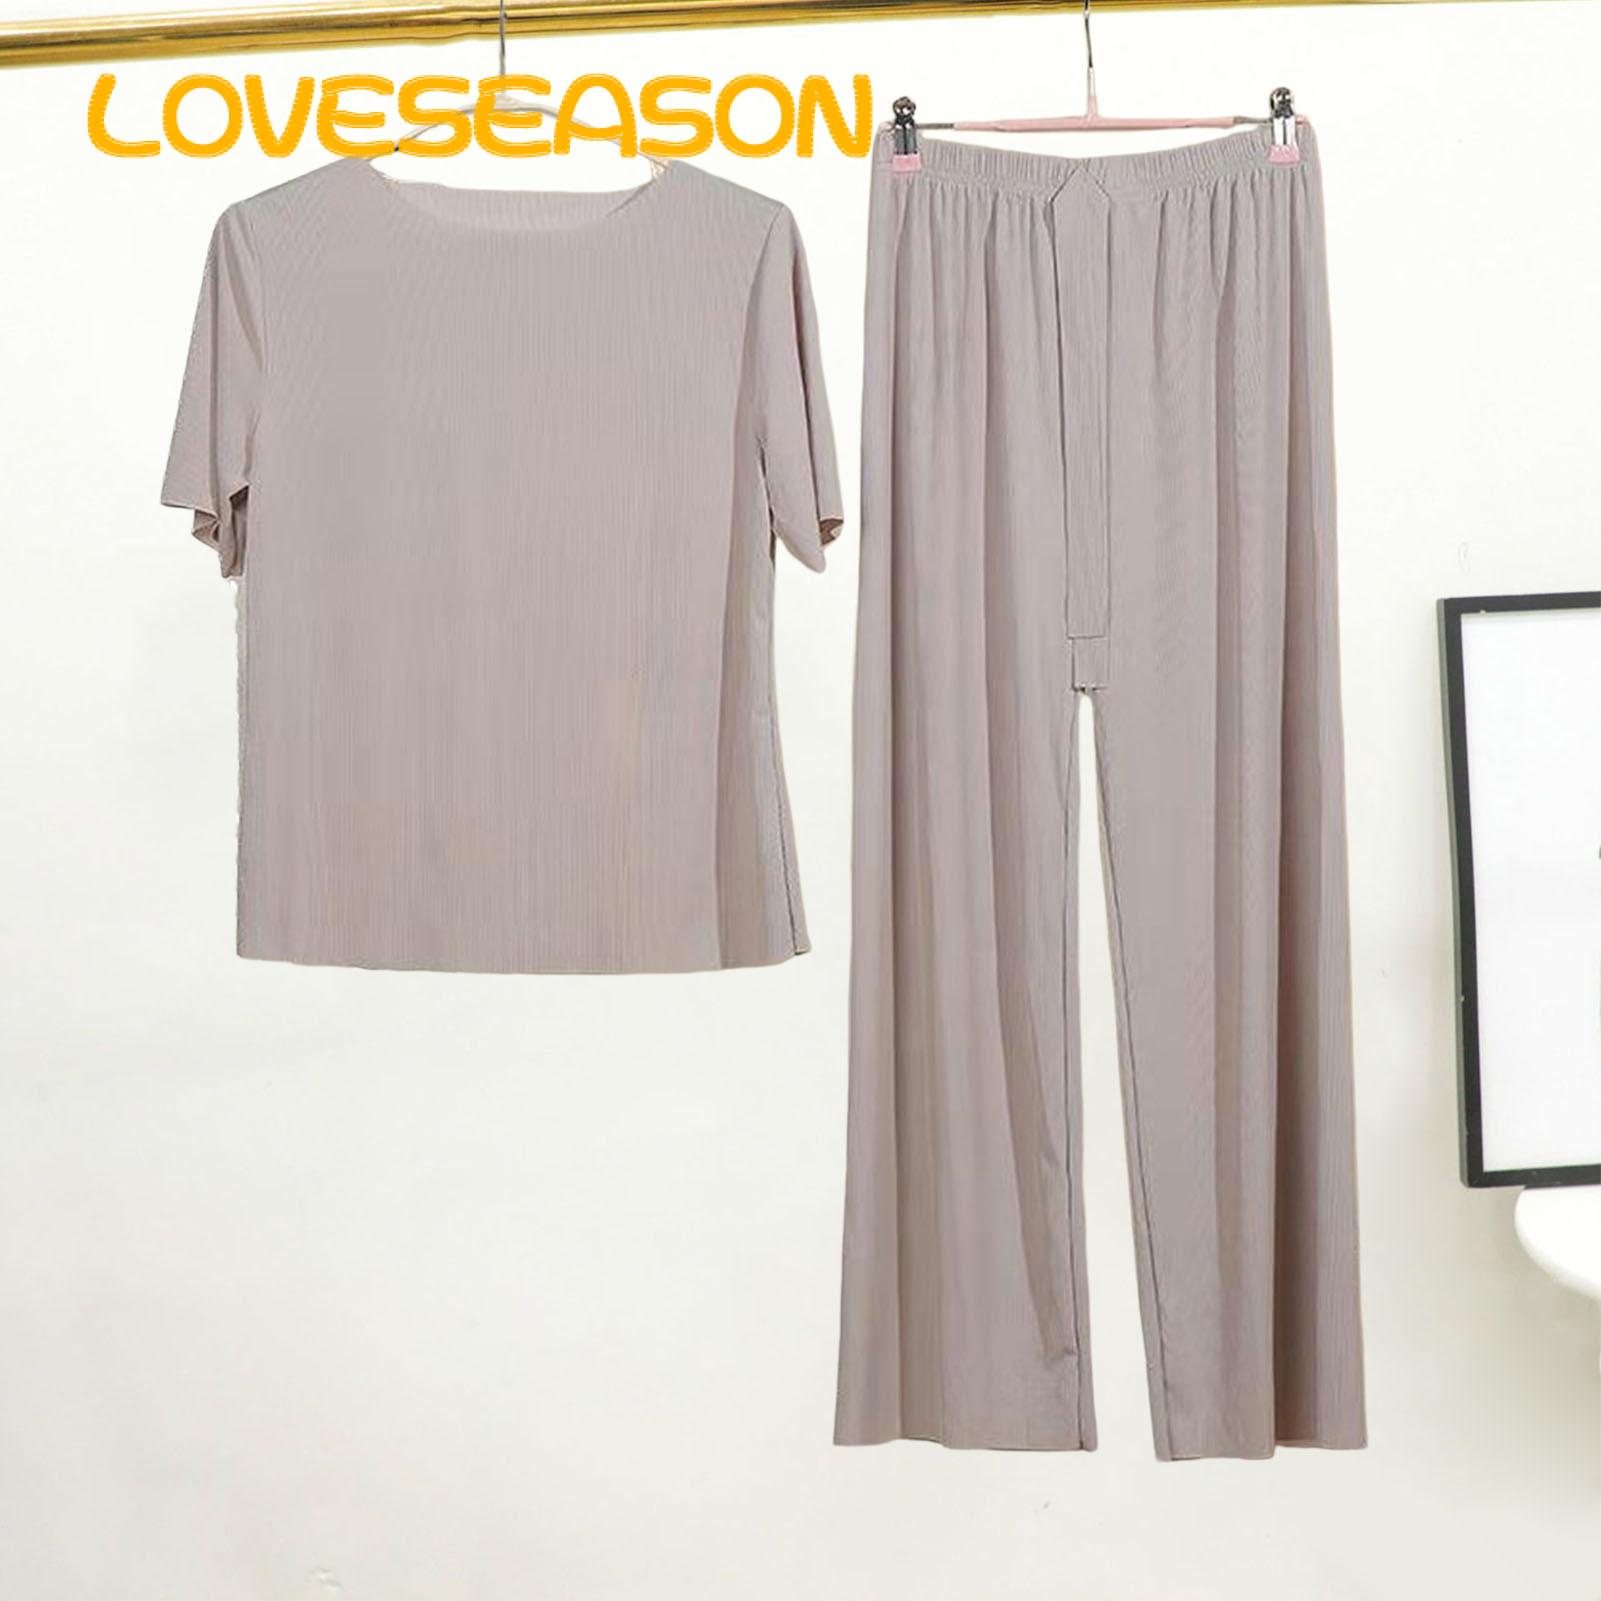 Loveseason Leisure Outfit O-neck Loose Fit Ice Silk Girls Pajamas Set